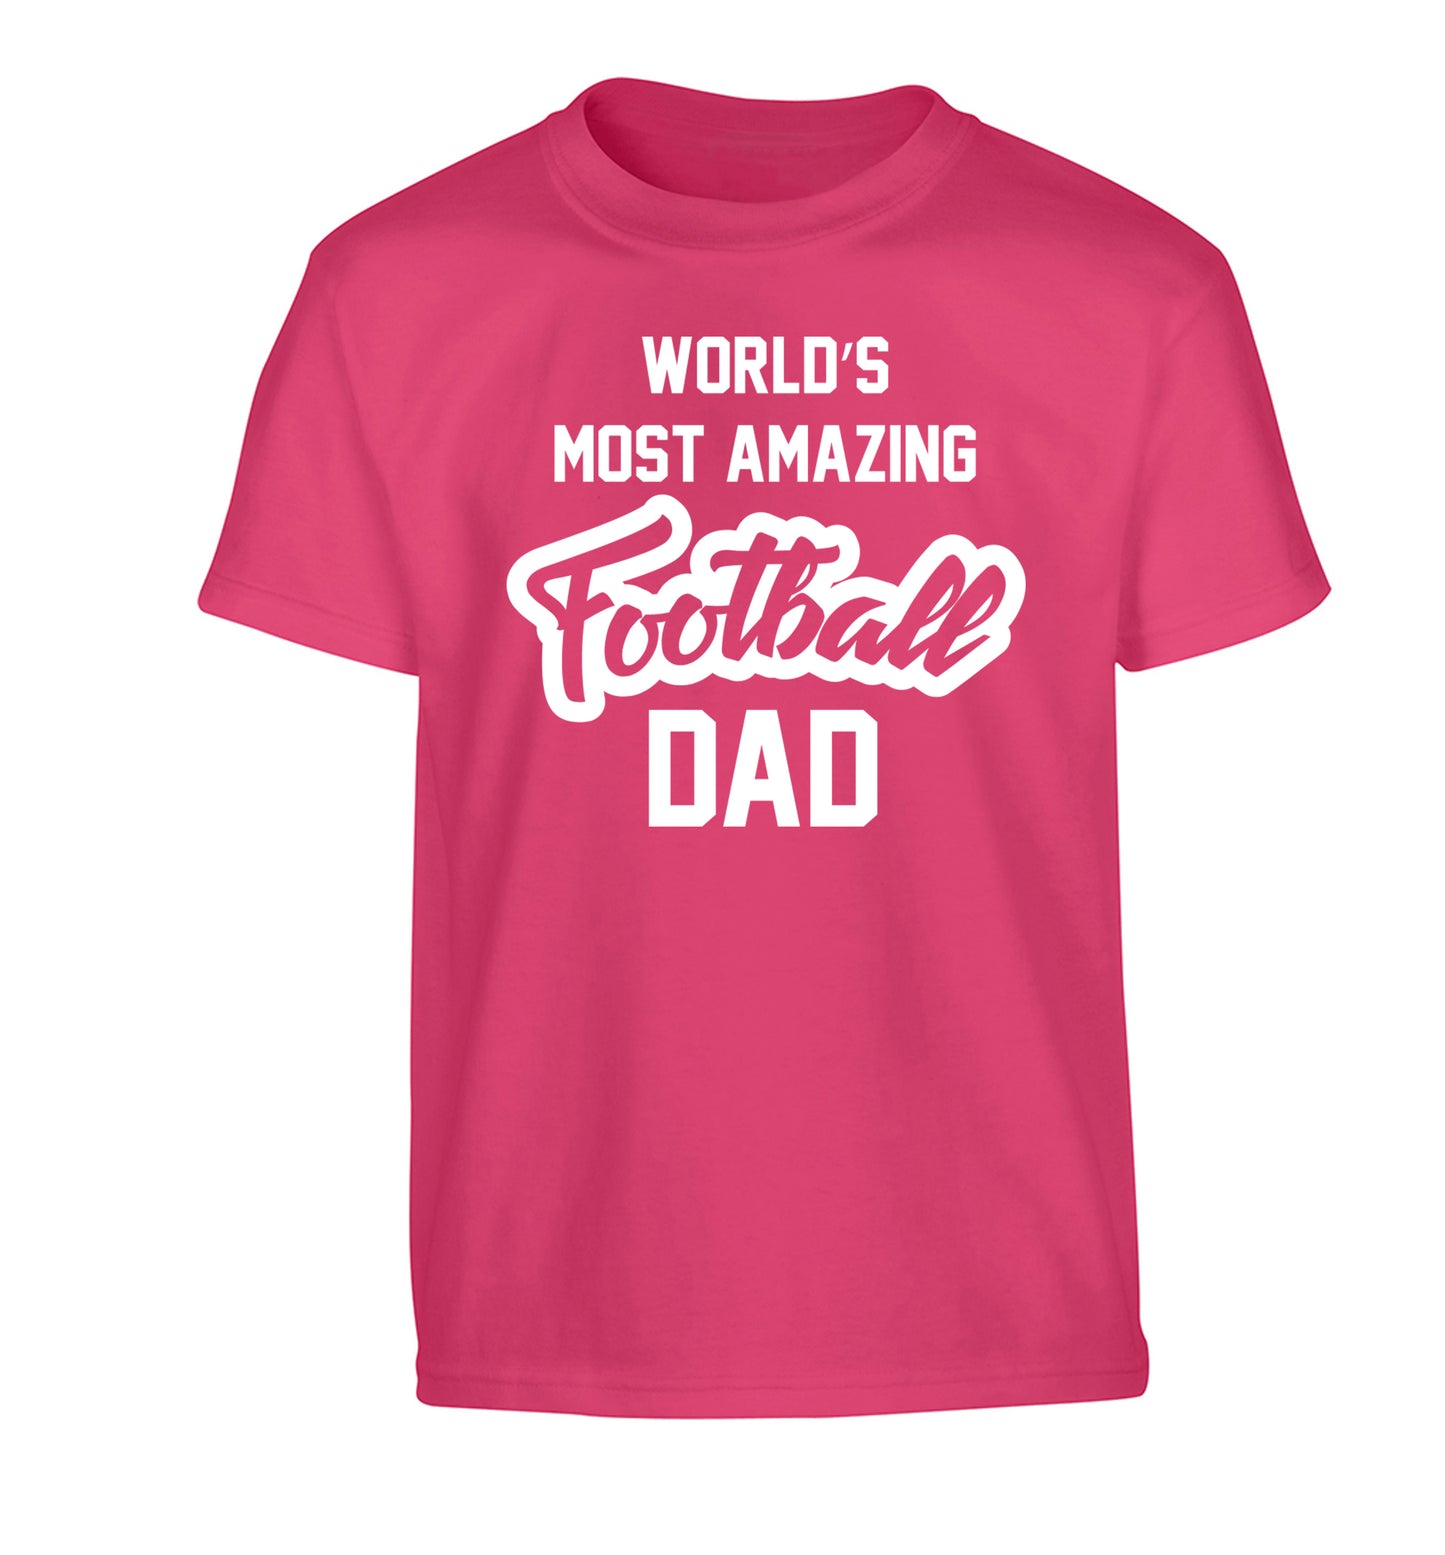 Worlds most amazing football dad Children's pink Tshirt 12-14 Years